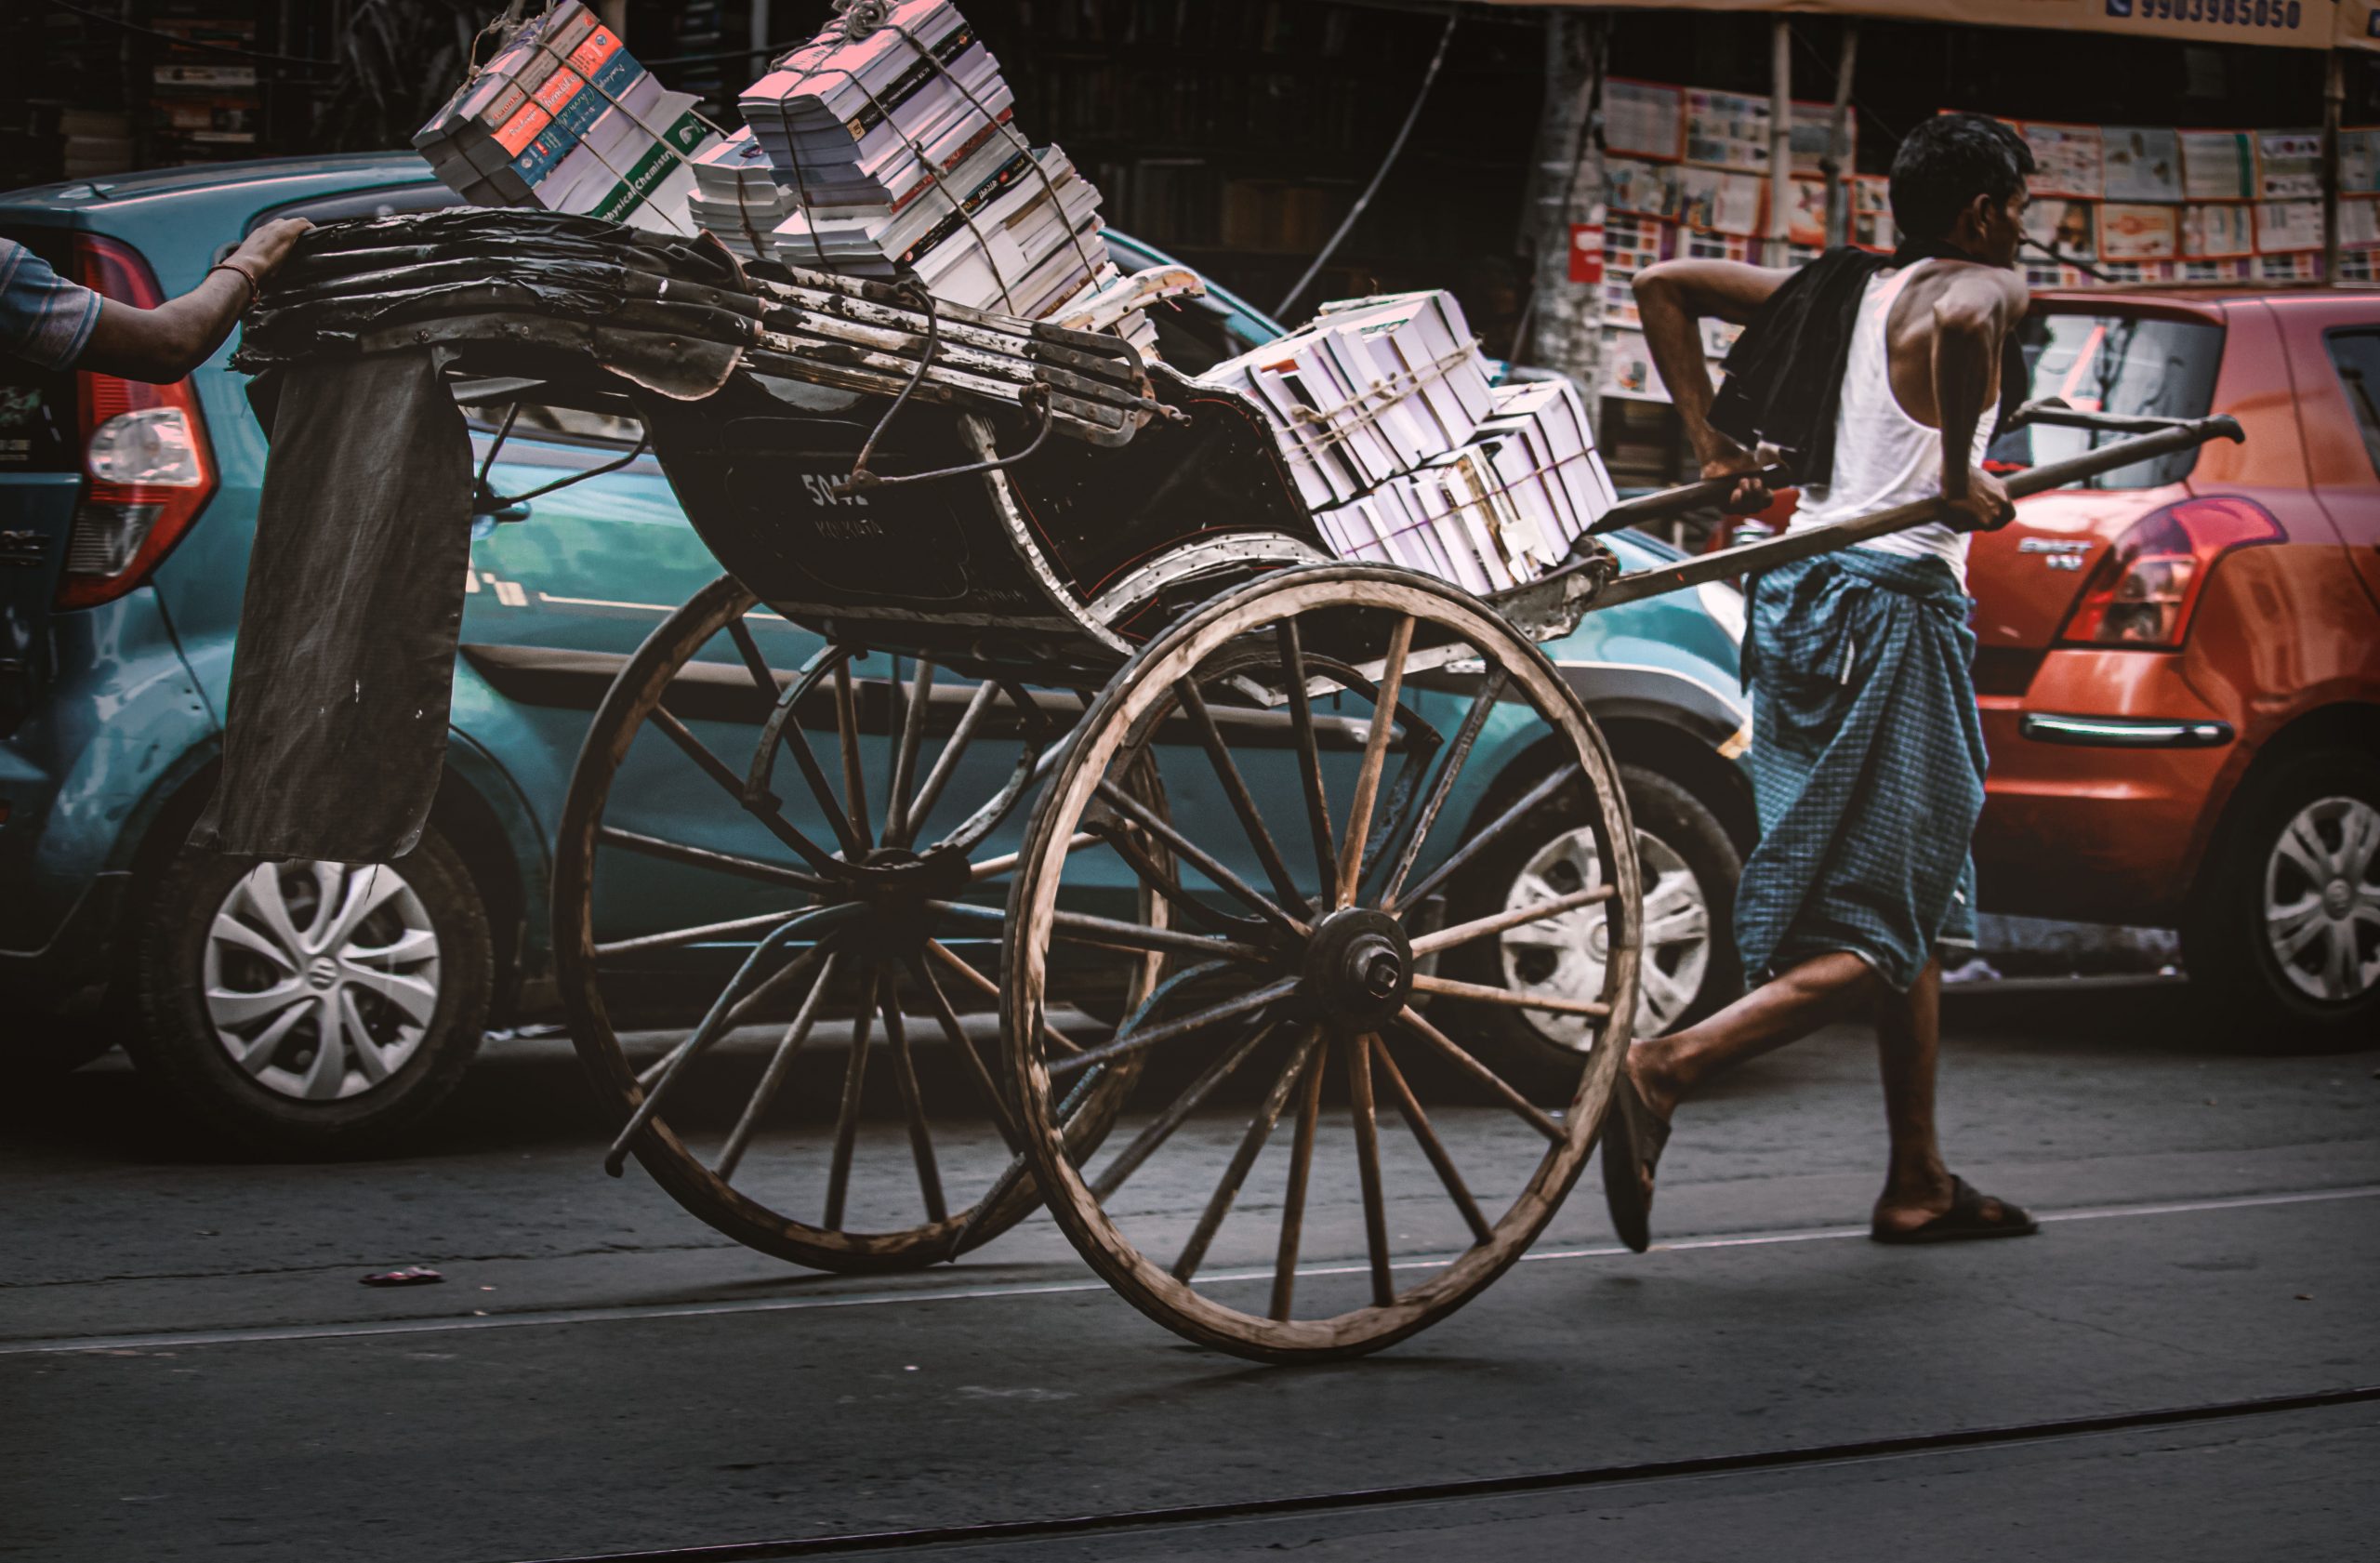 A Pulled rickshaw